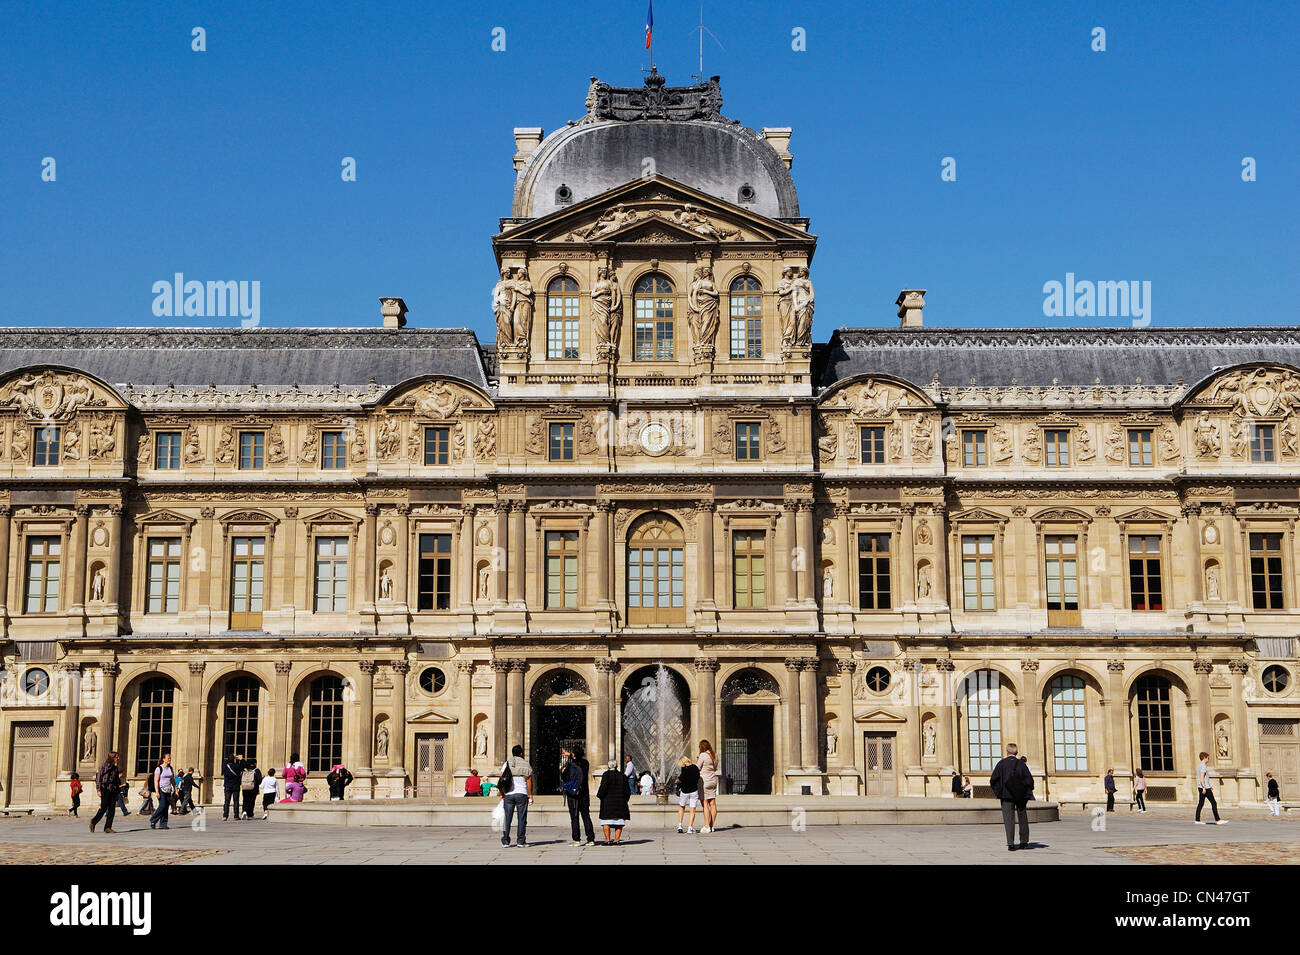 File:Monogram Louis XVIII cour Carree Louvre.jpg - Wikimedia Commons